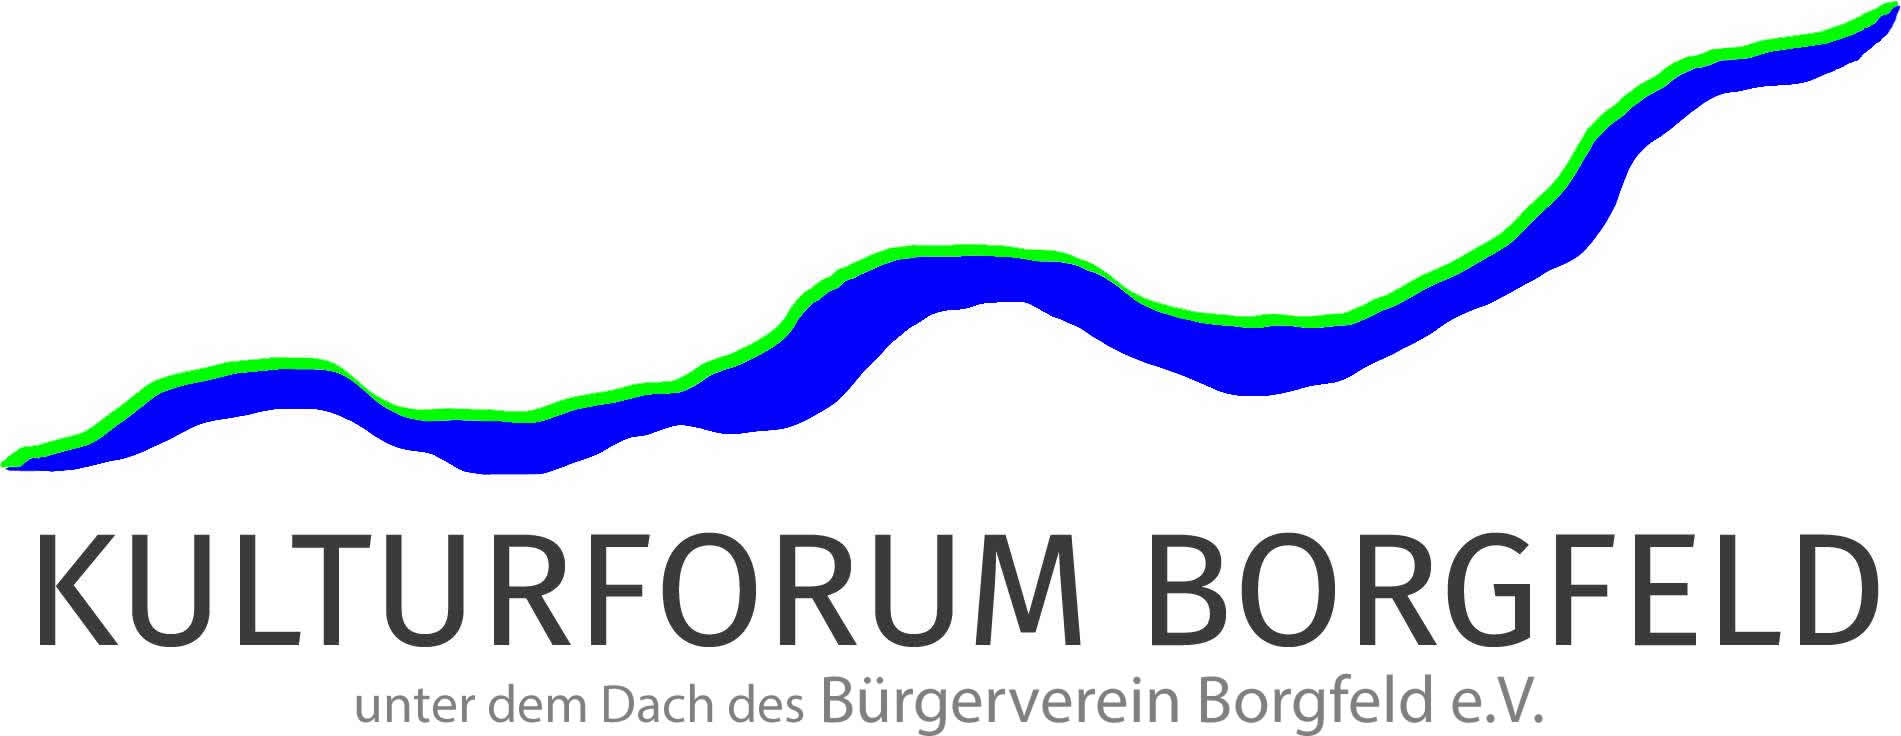 Kulturforum Borgfeld